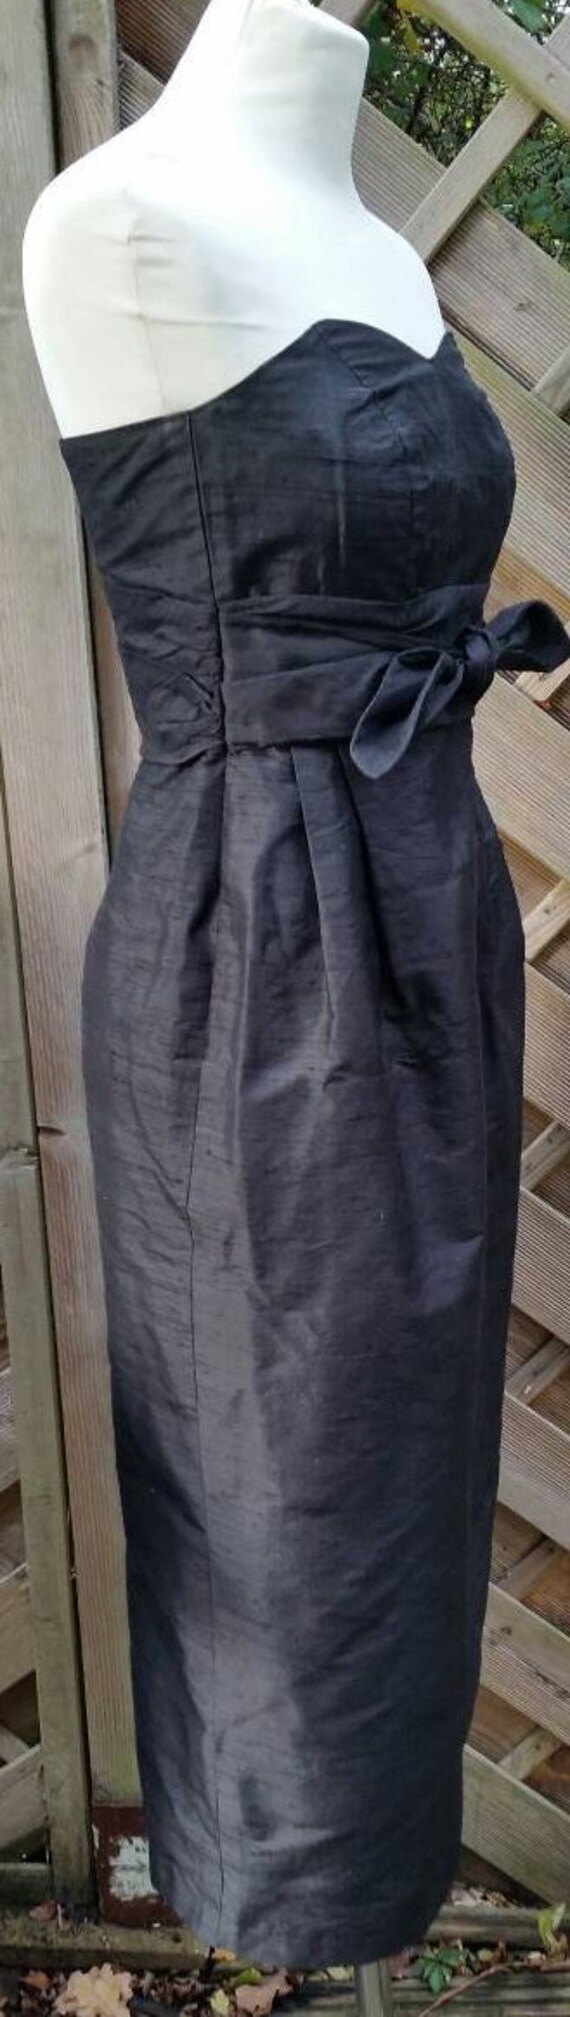 Black strapless evening dress UK size 8 - image 3